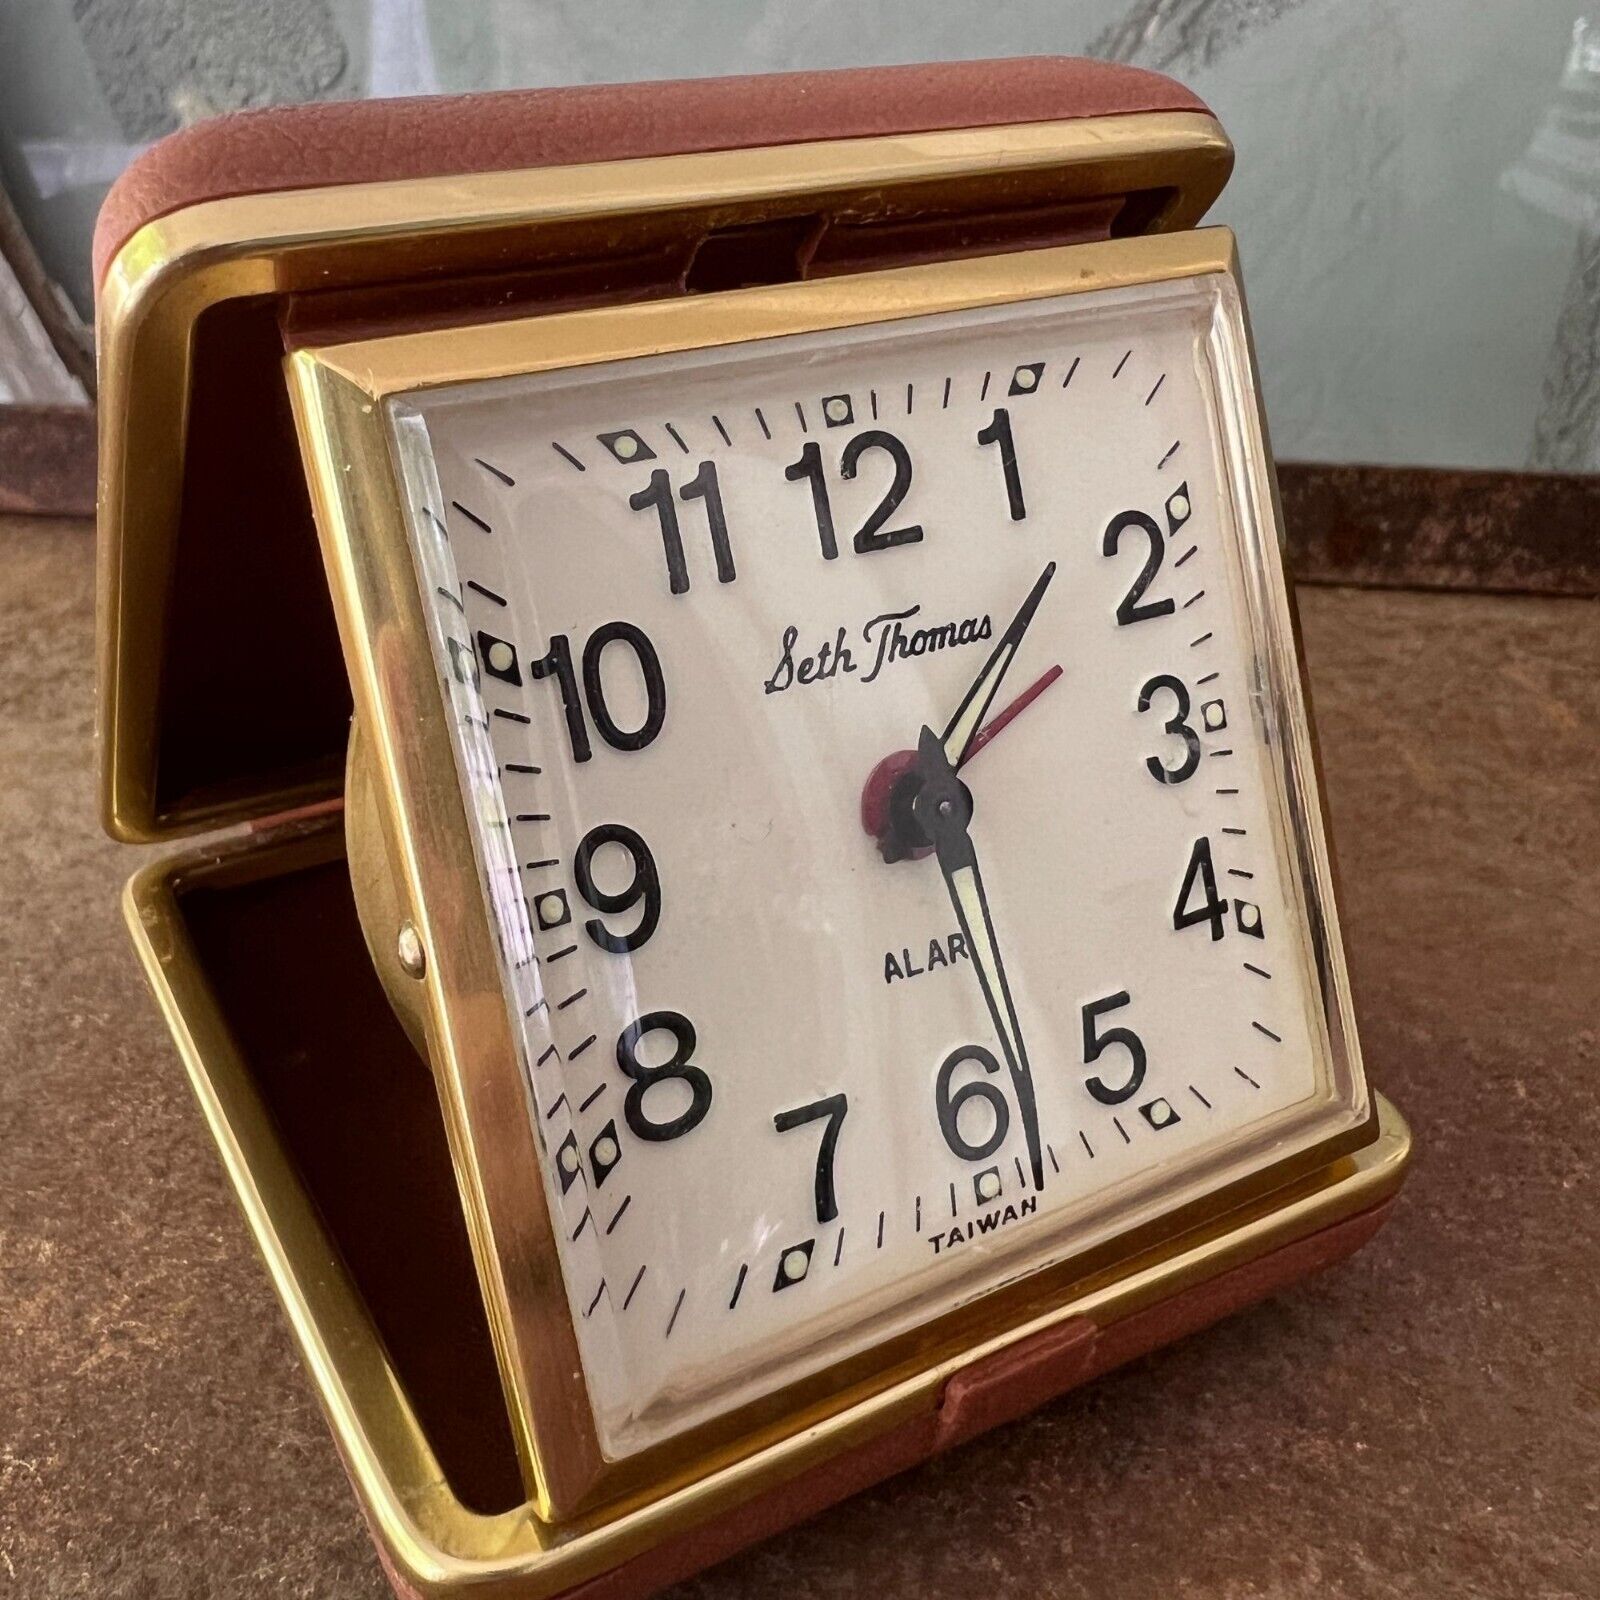 Vintage Seth Thomas Travel Alarm Clock - Fully Functional, Classic Timepiece